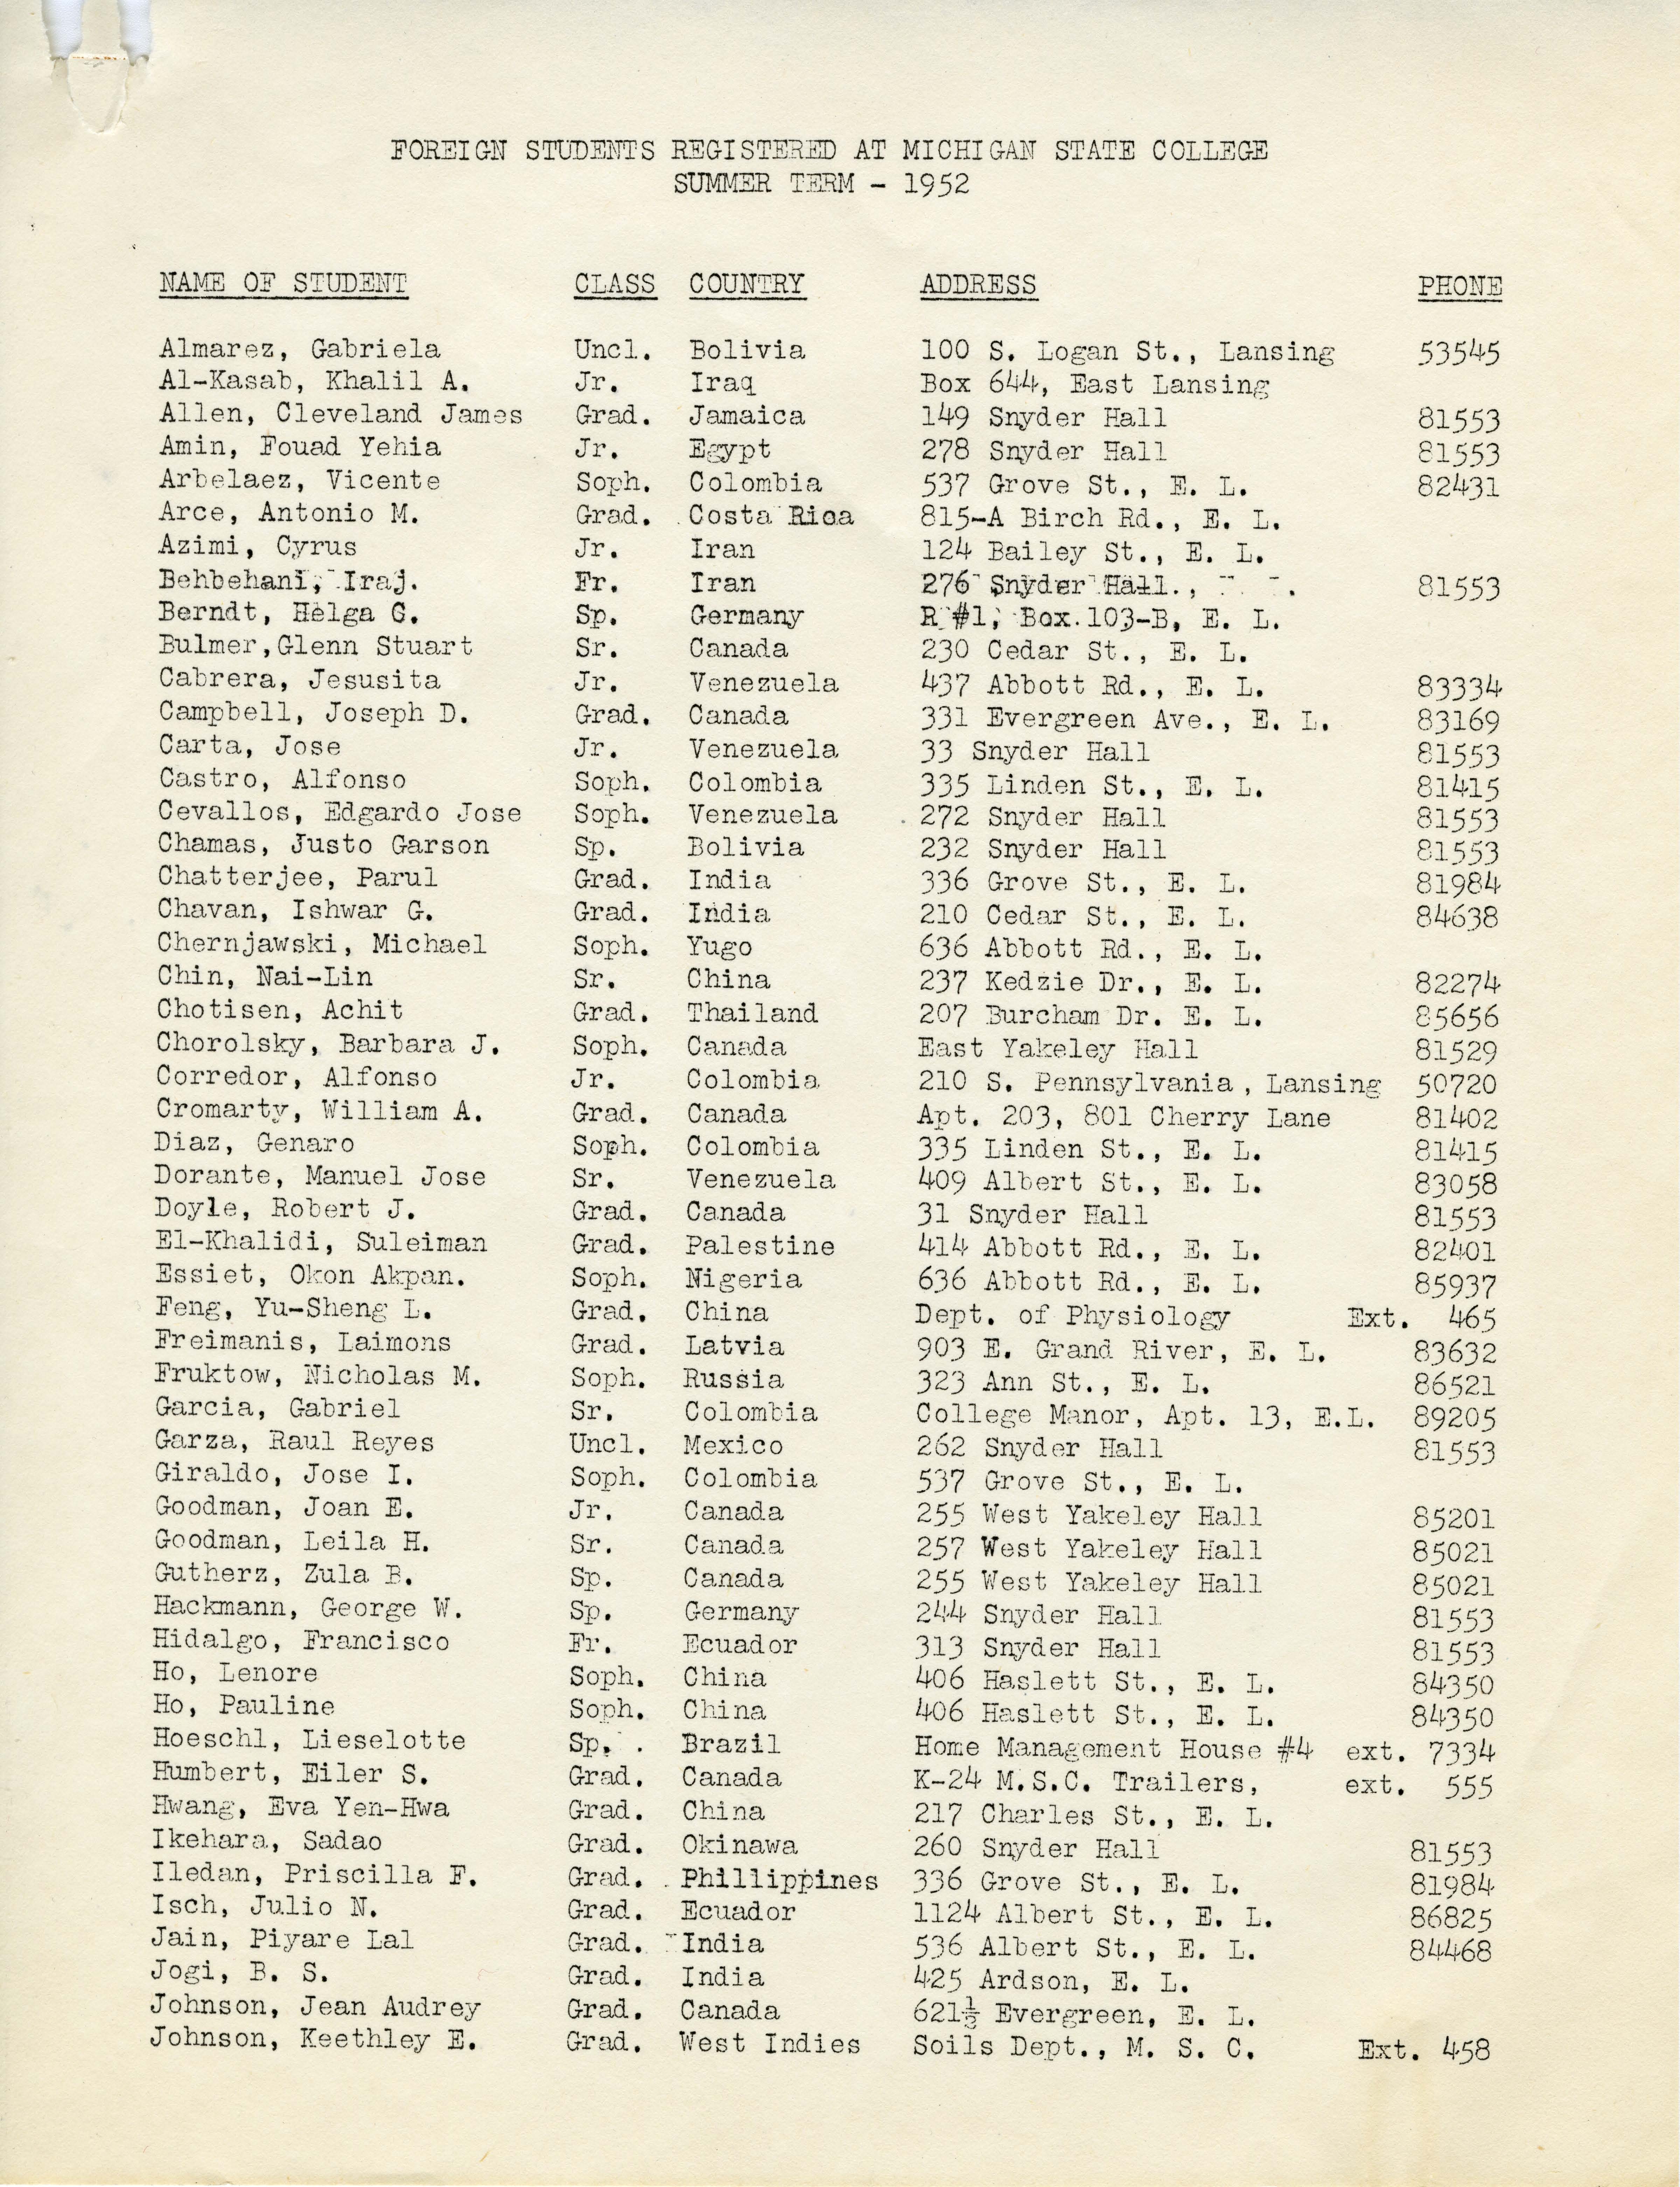 1952 (Summer) International Student Directory